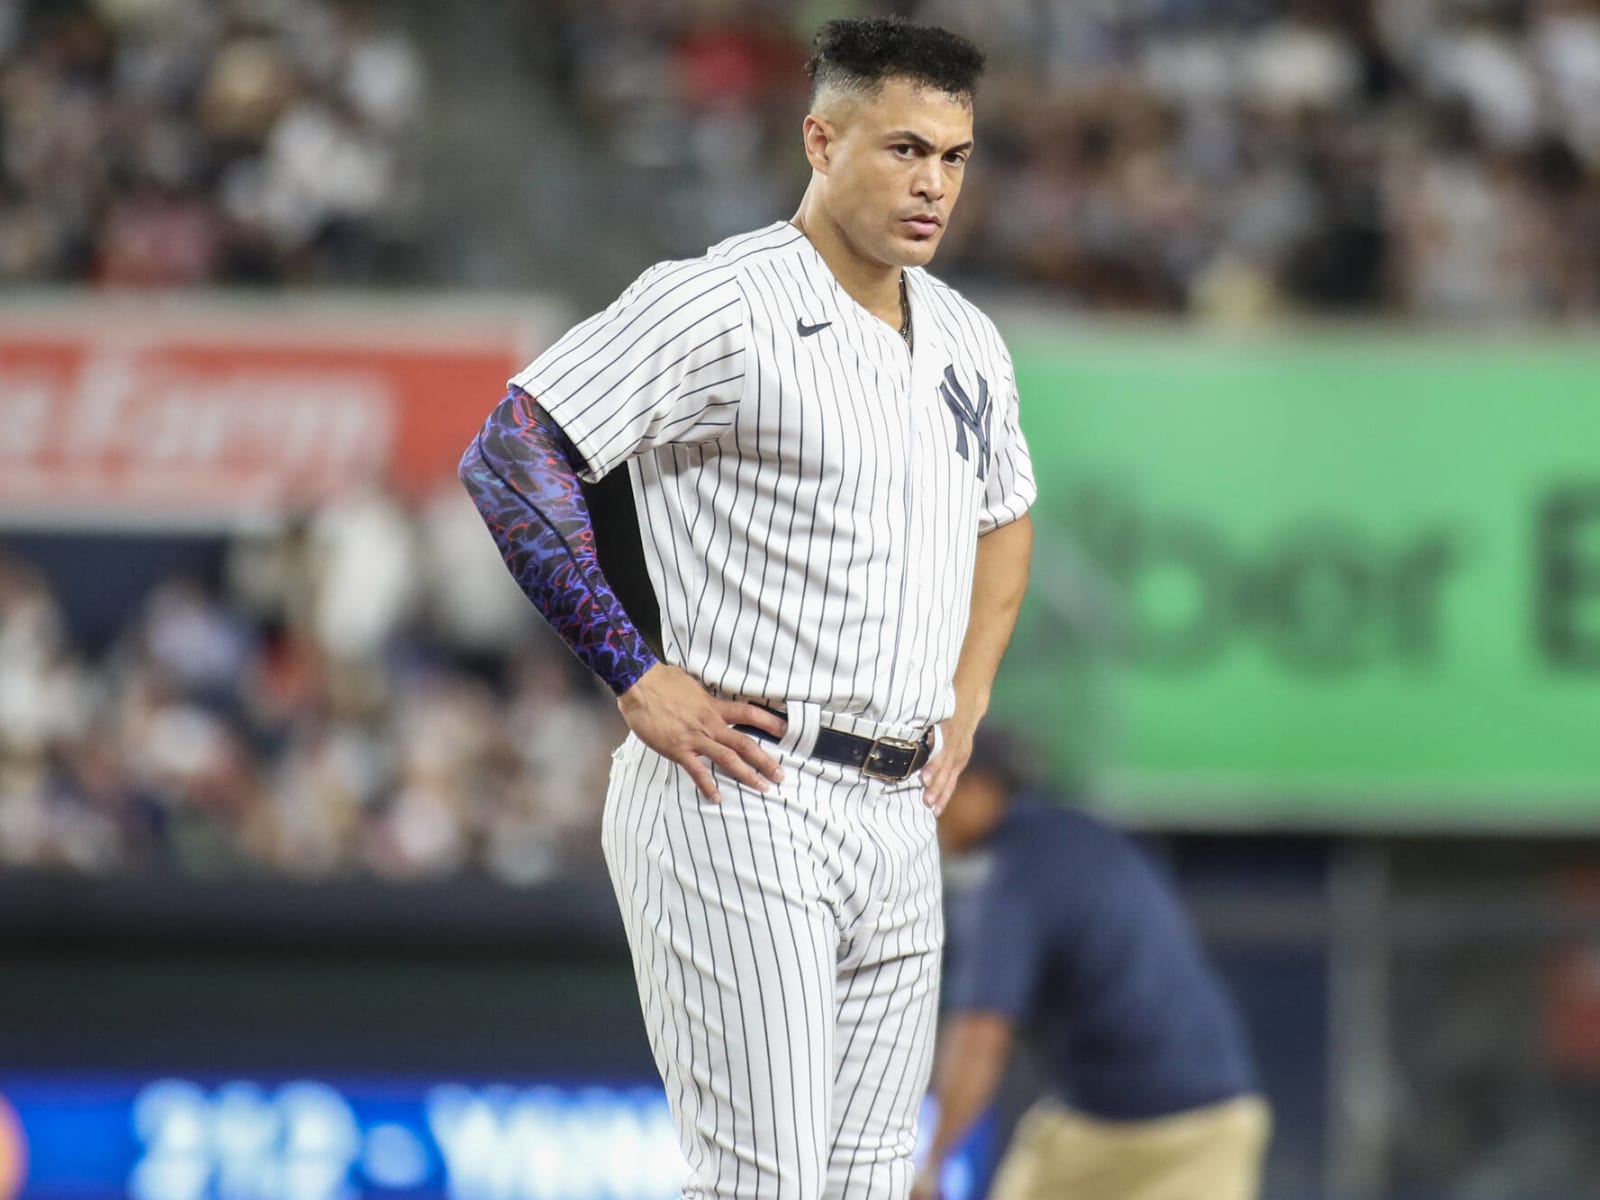 Yankees' $32 million slugger having career-worst season